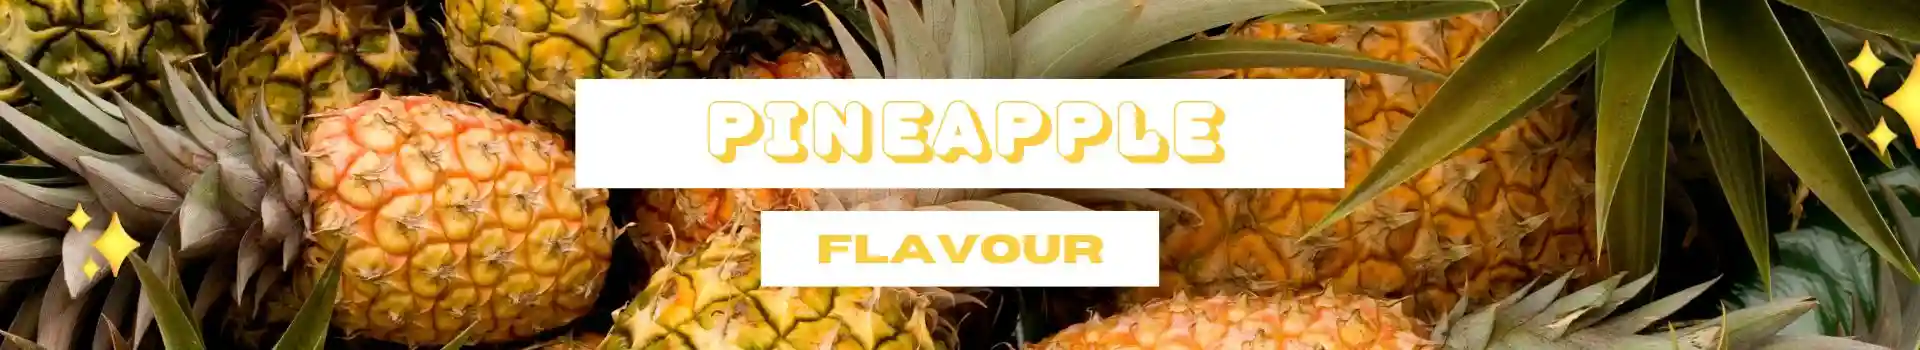 IGET Vape Flavours - Pineapple